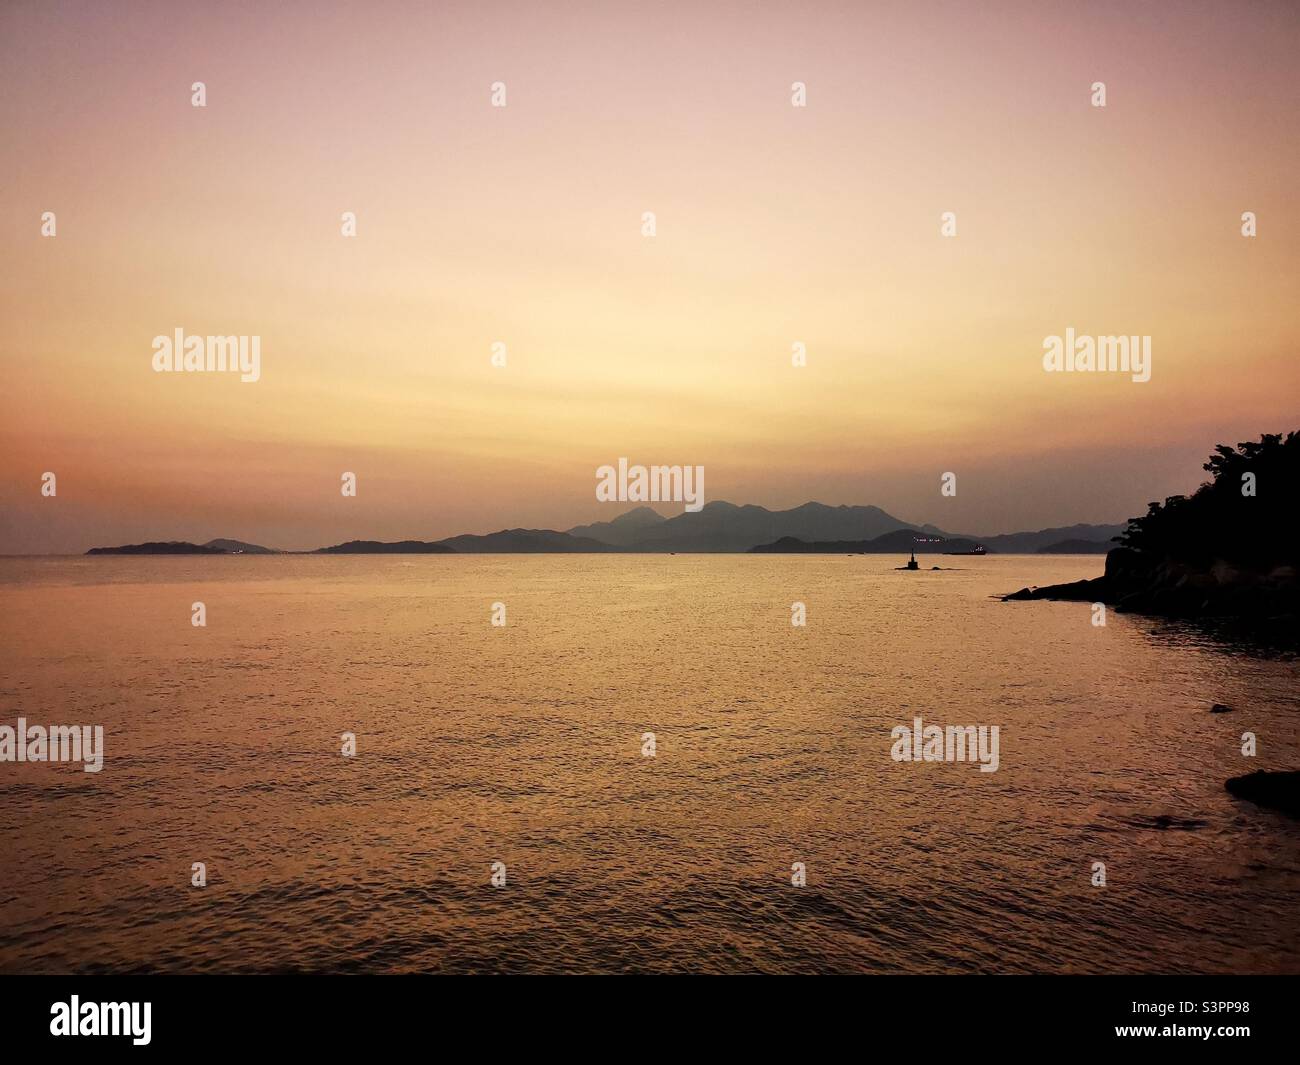 A beautiful sunset seen from Lamma island in Hong Kong. Stock Photo